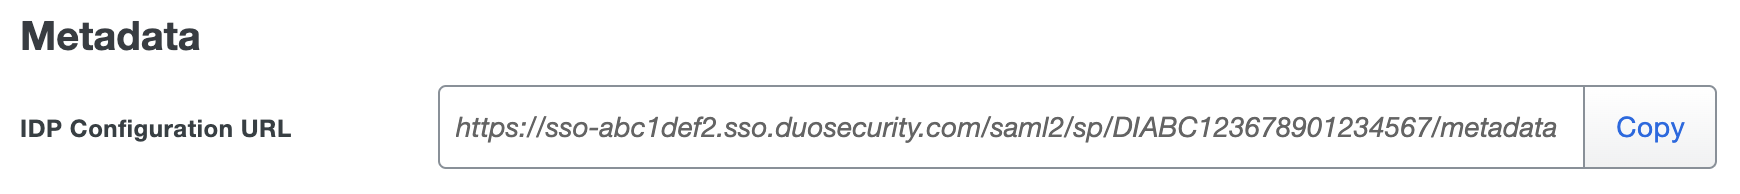 Duo CyberArk Workforce Identity IdP Configuration URL